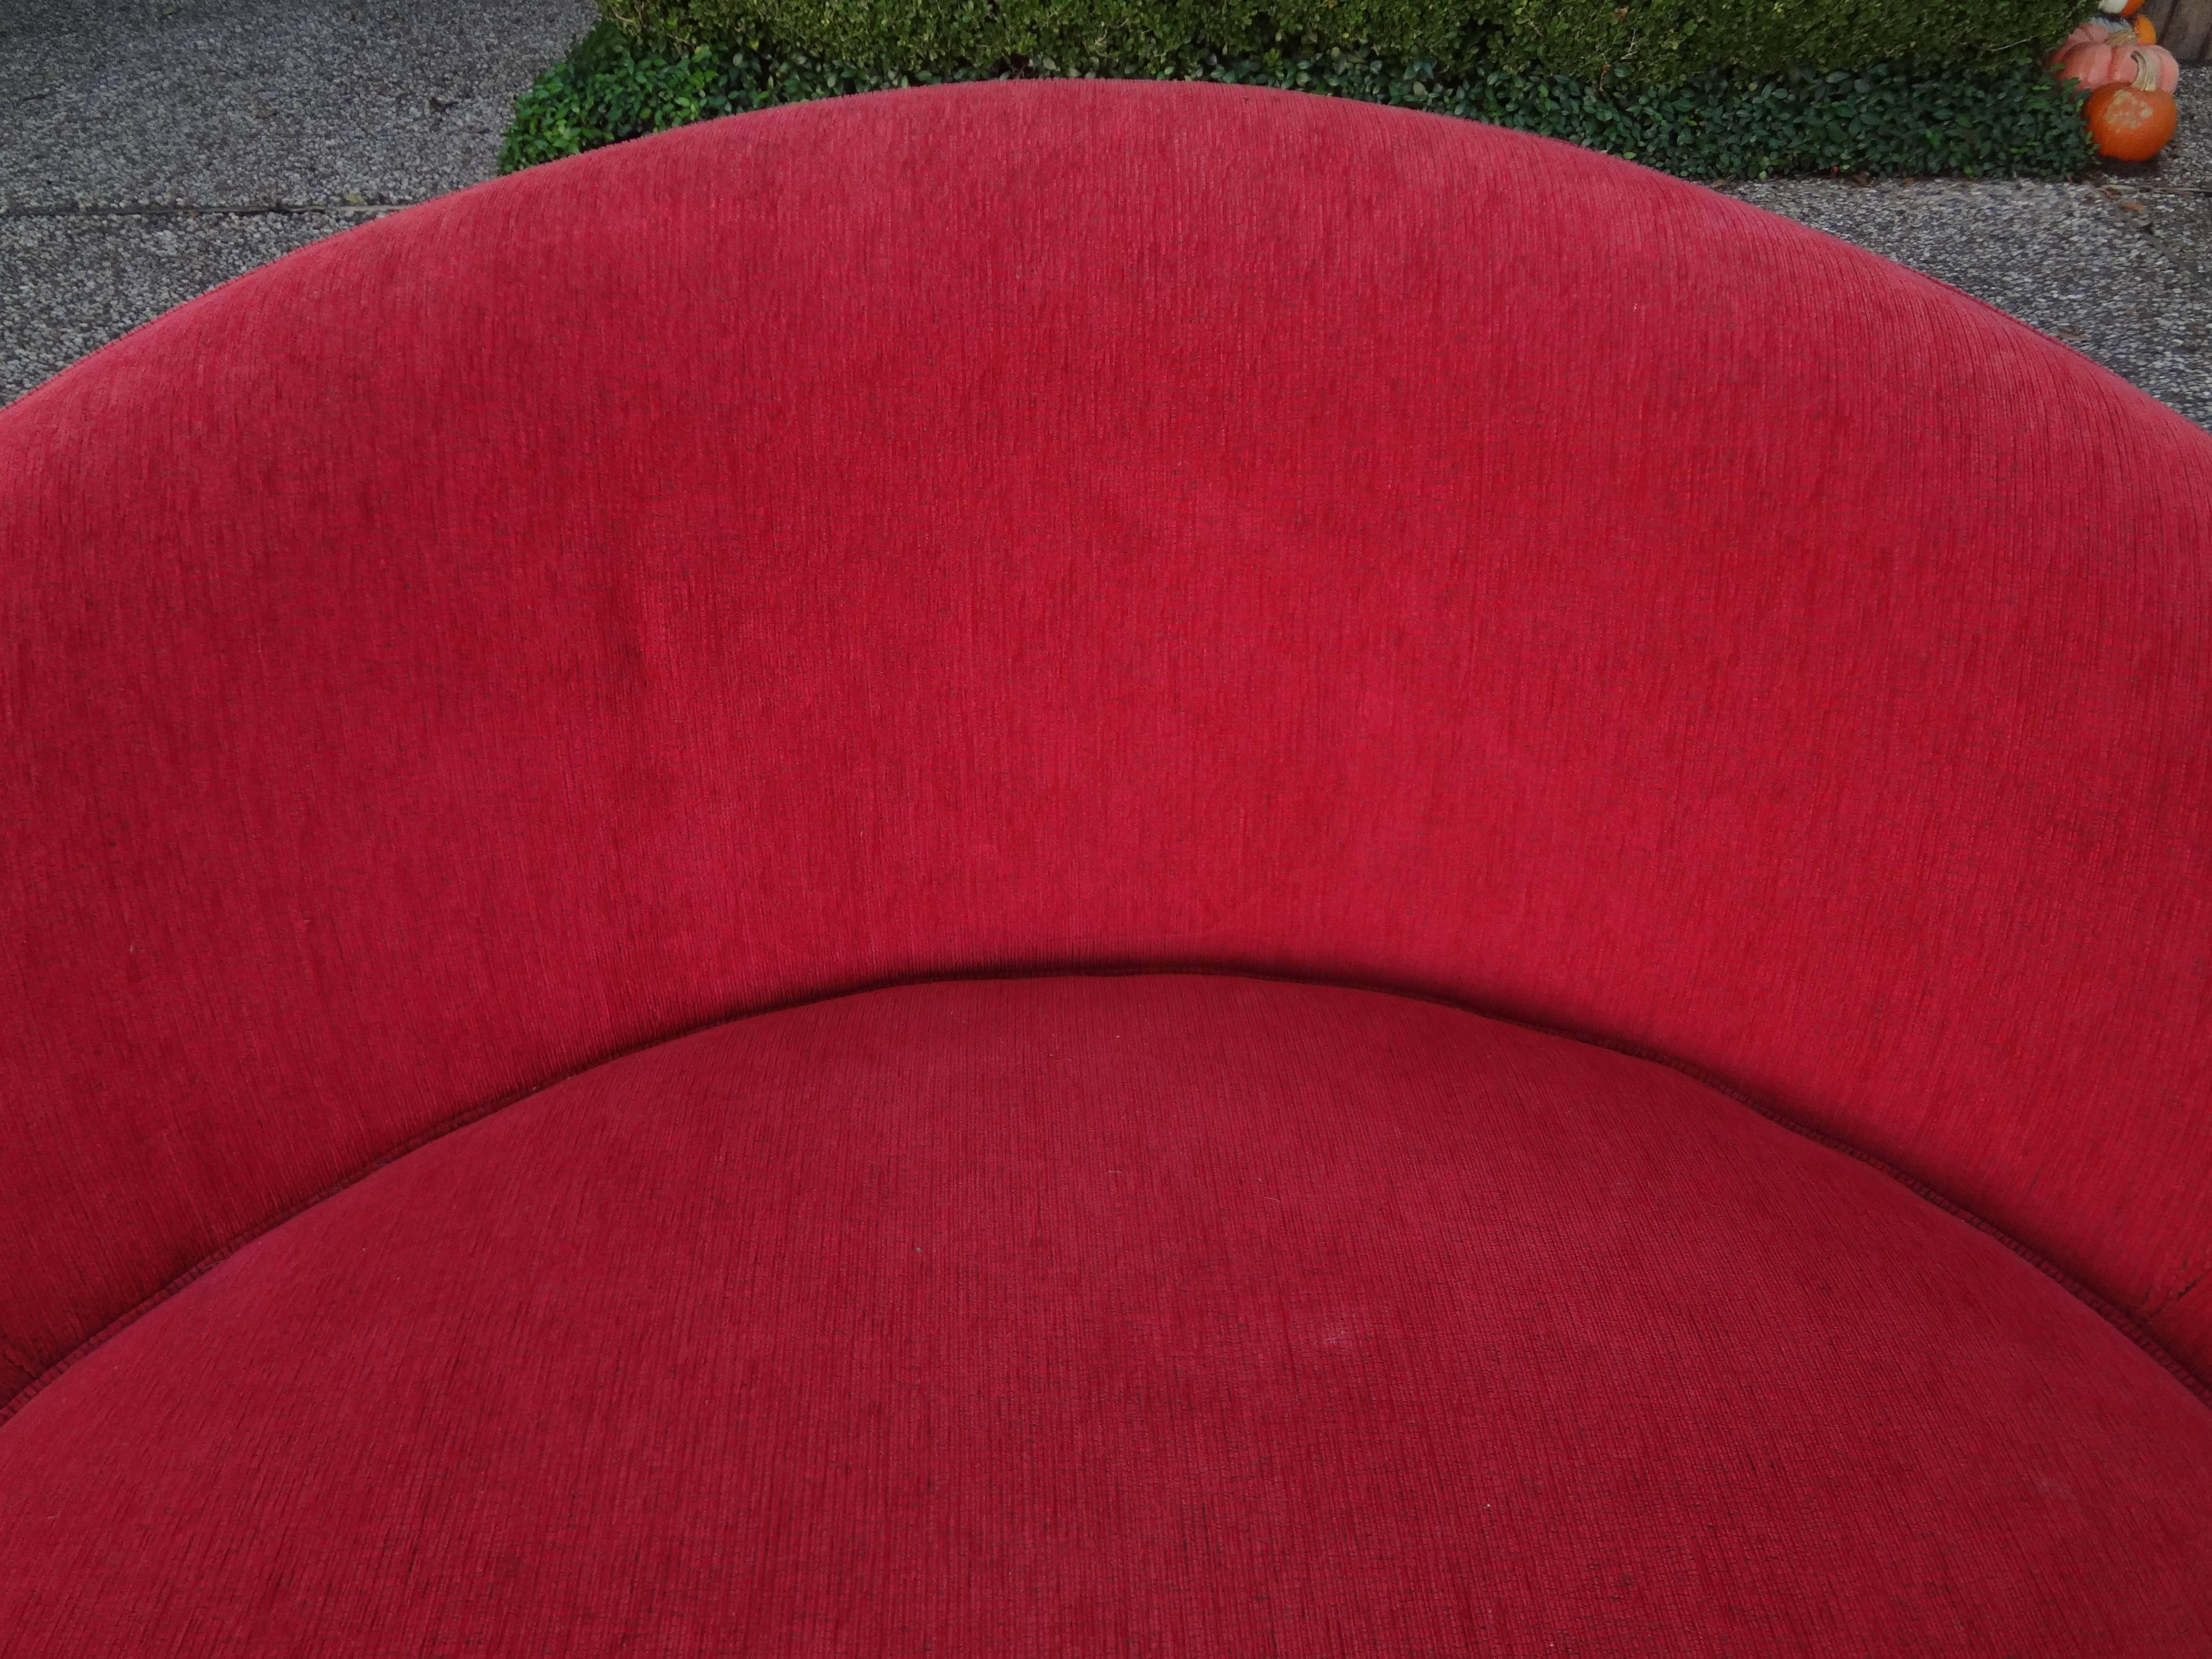 American Large Milo Baughman Mid Century Modern Round Chaise or Satellite Chair